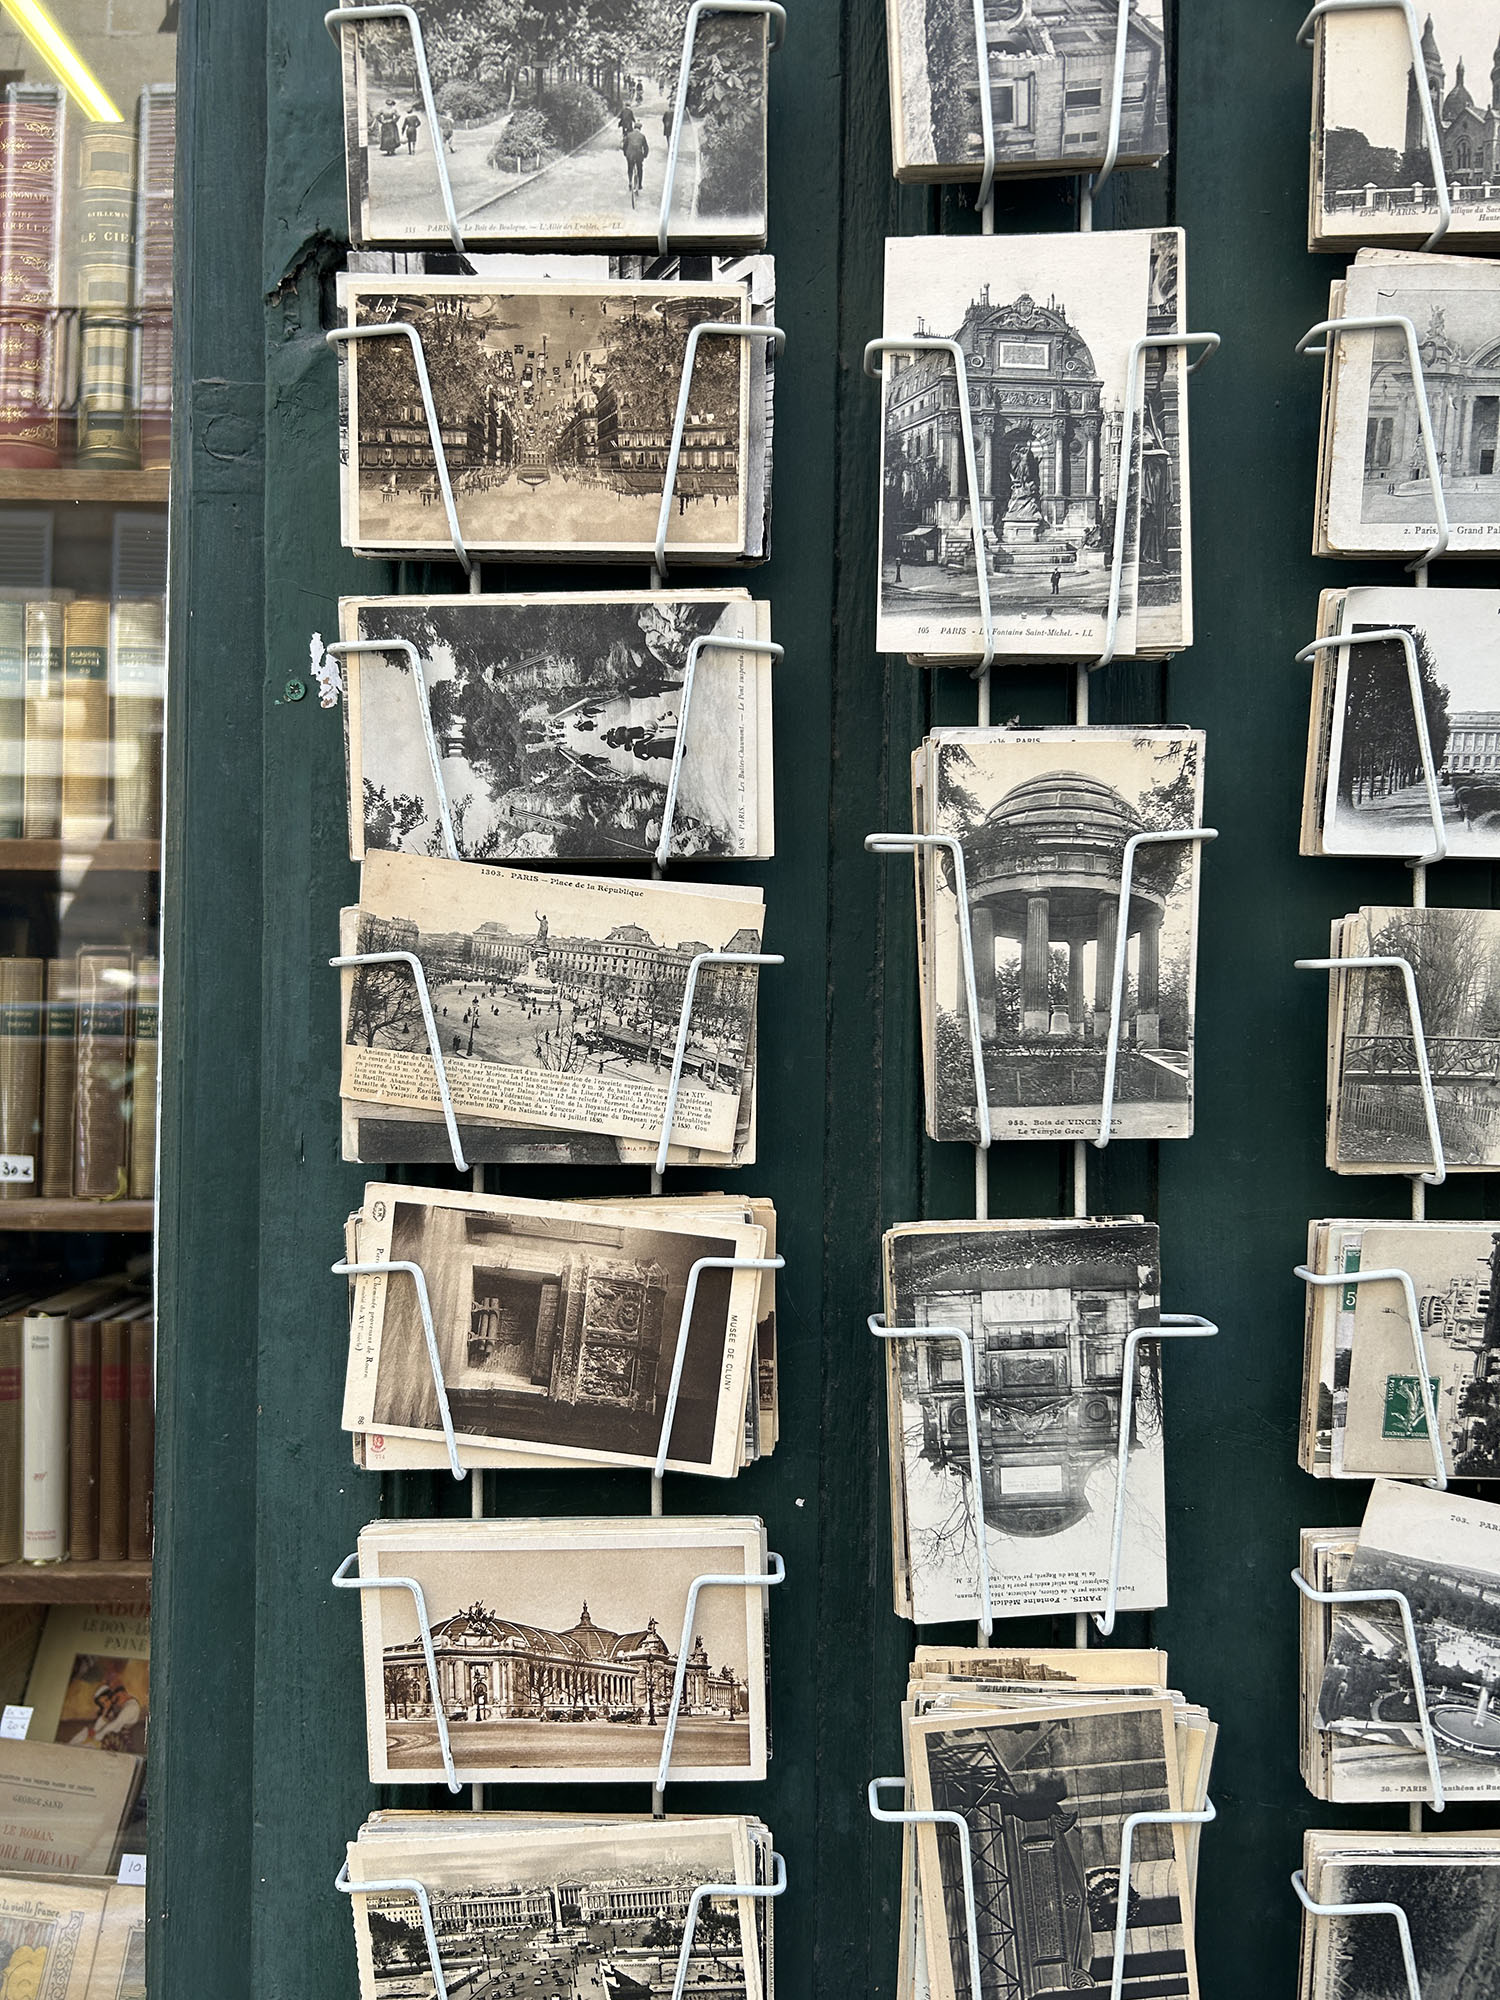 Coco & Voltaire - Postcards at a vintage bookshop in the sixth arrondissement of Paris